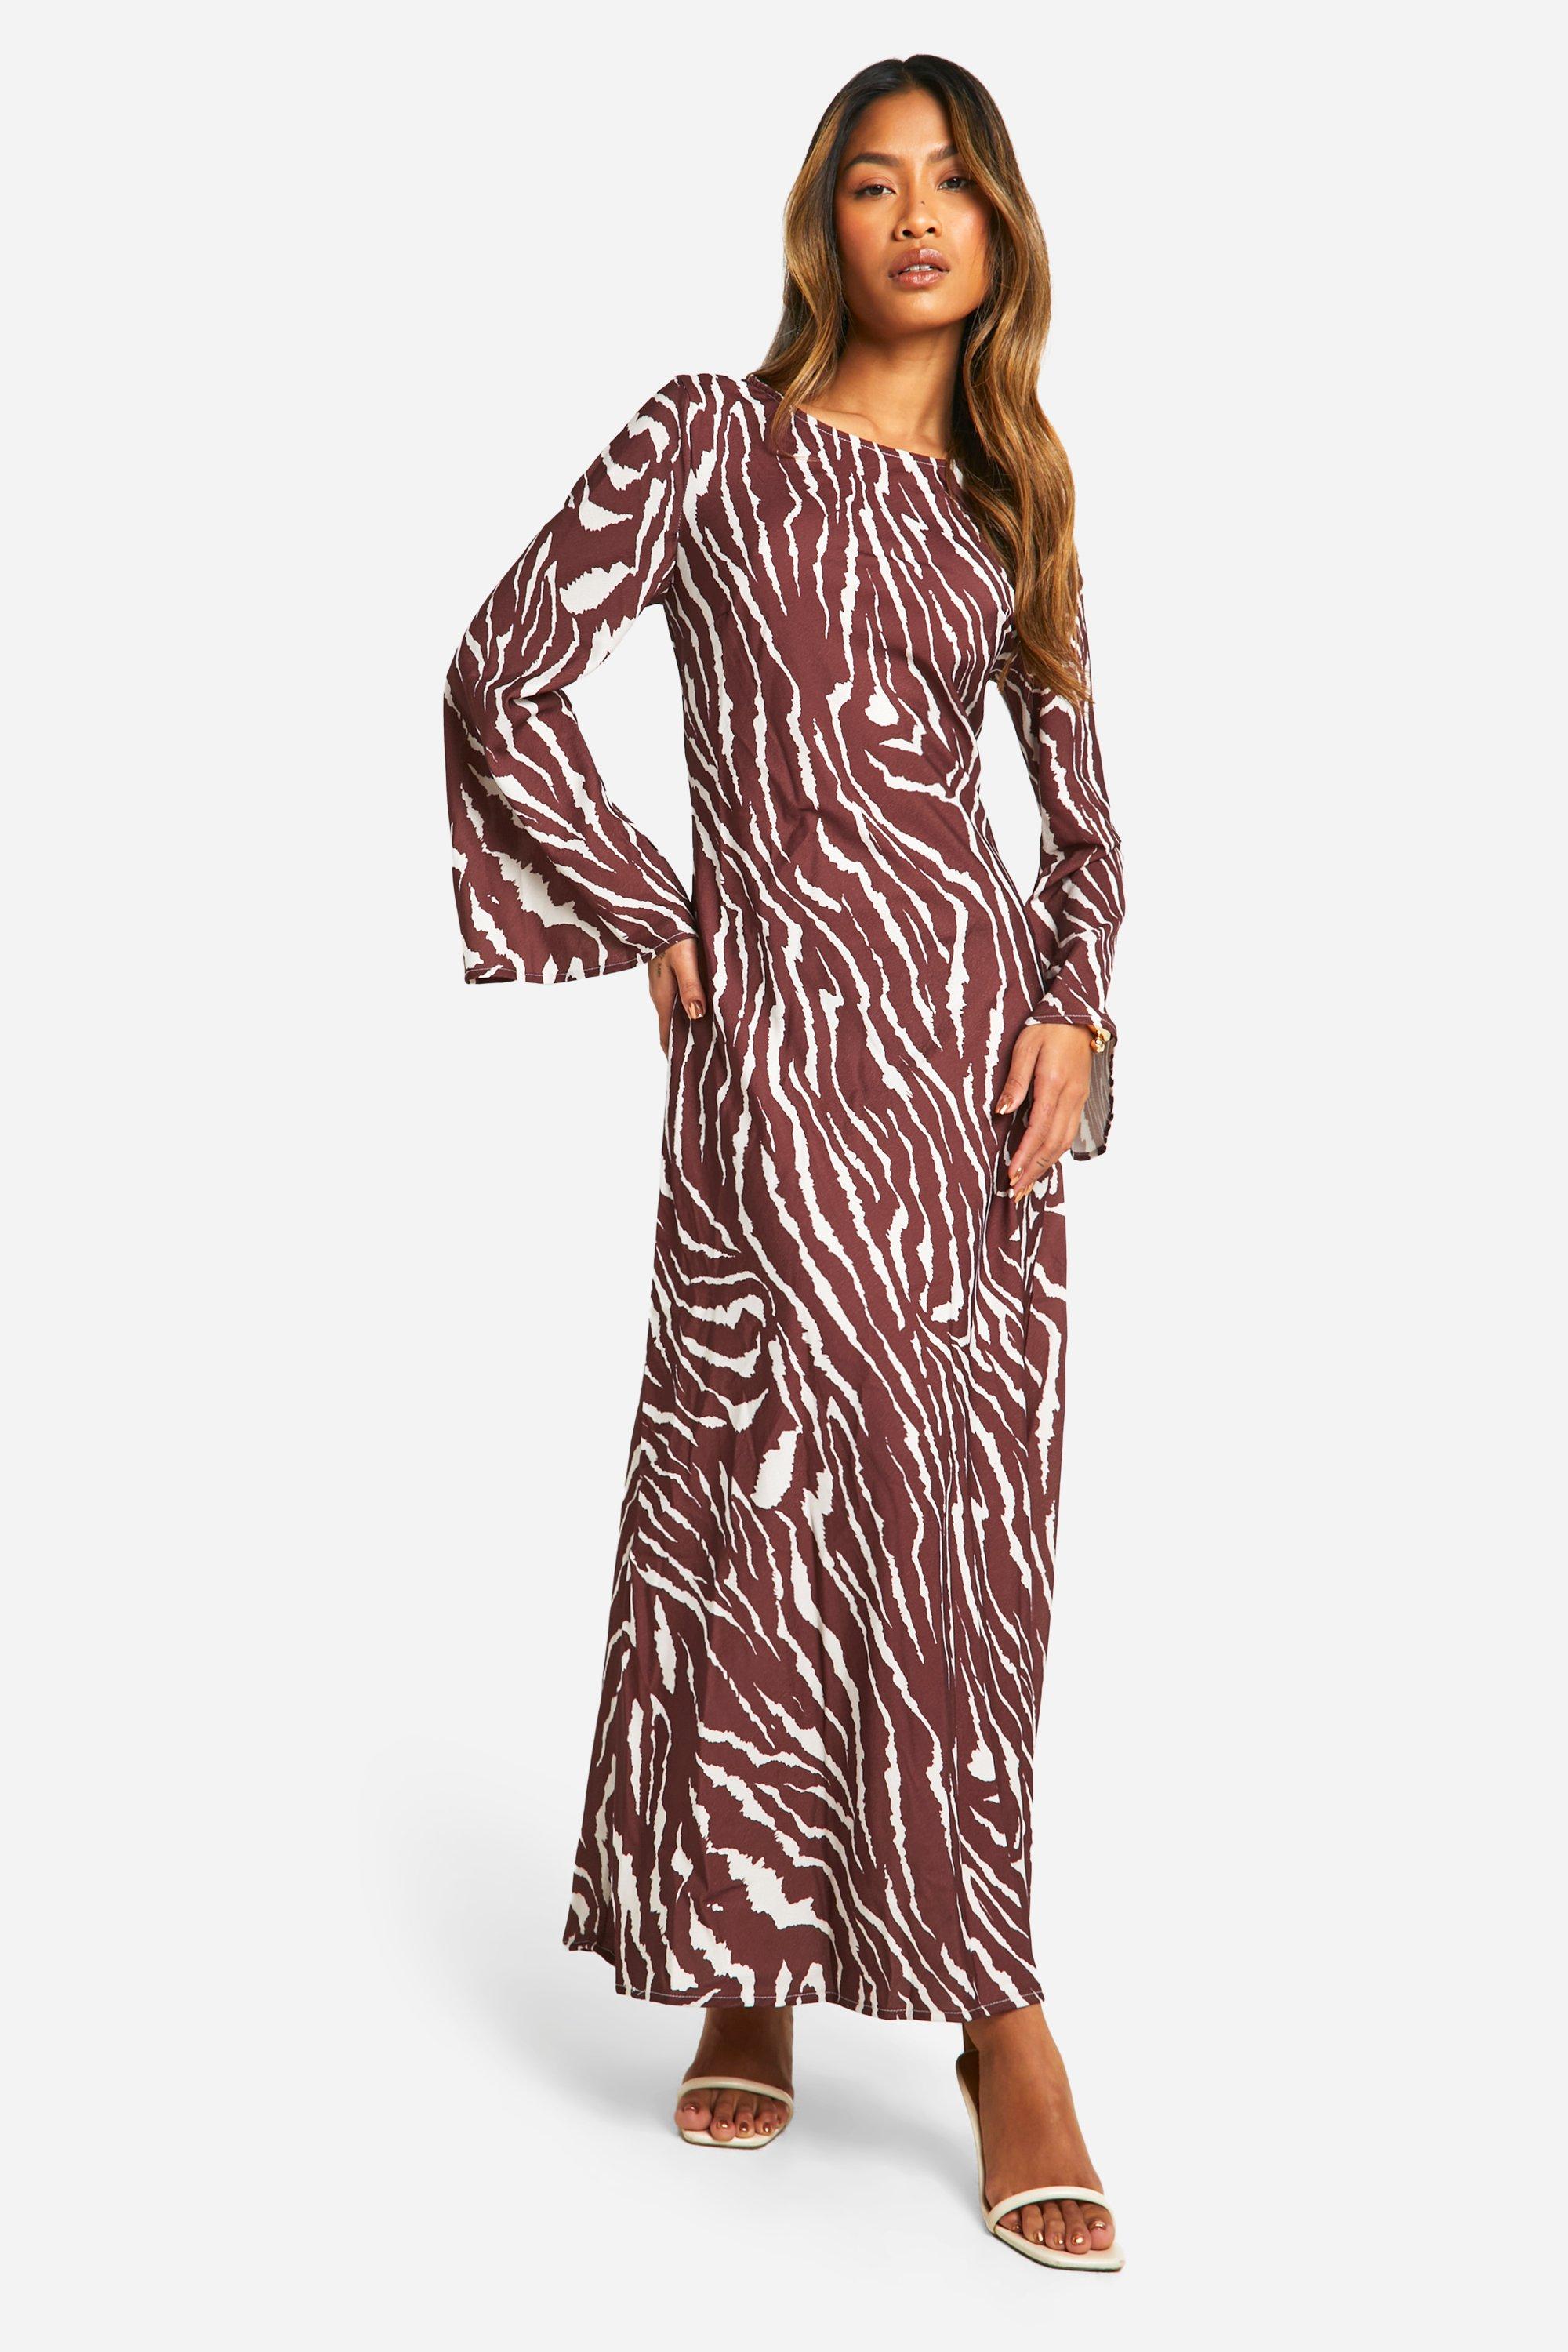 Image of Zebra Flare Sleeve Maxi Dress, Brown